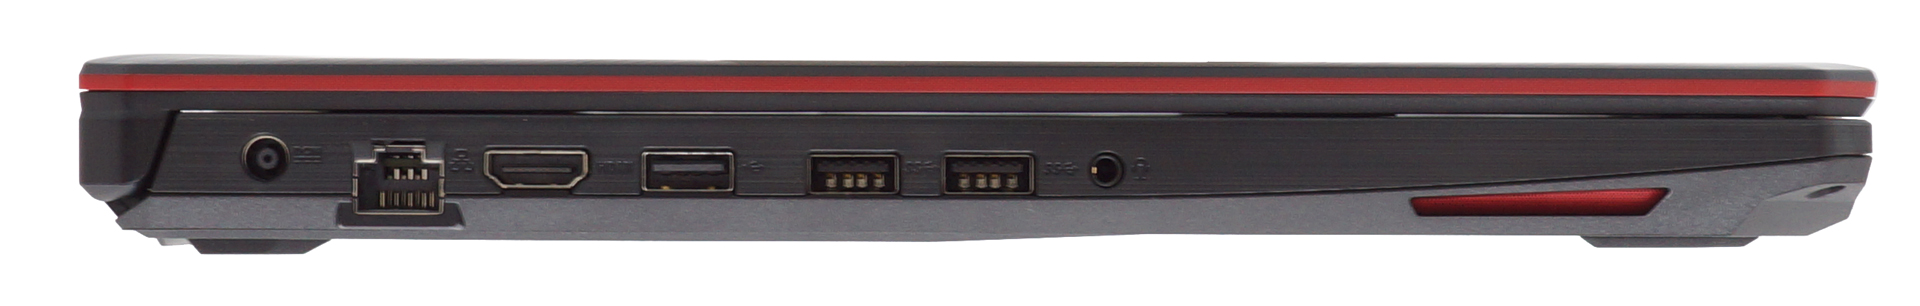 Test Asus TUF Gaming 505, ce PC portable gamer dopé à l'AMD Ryzen